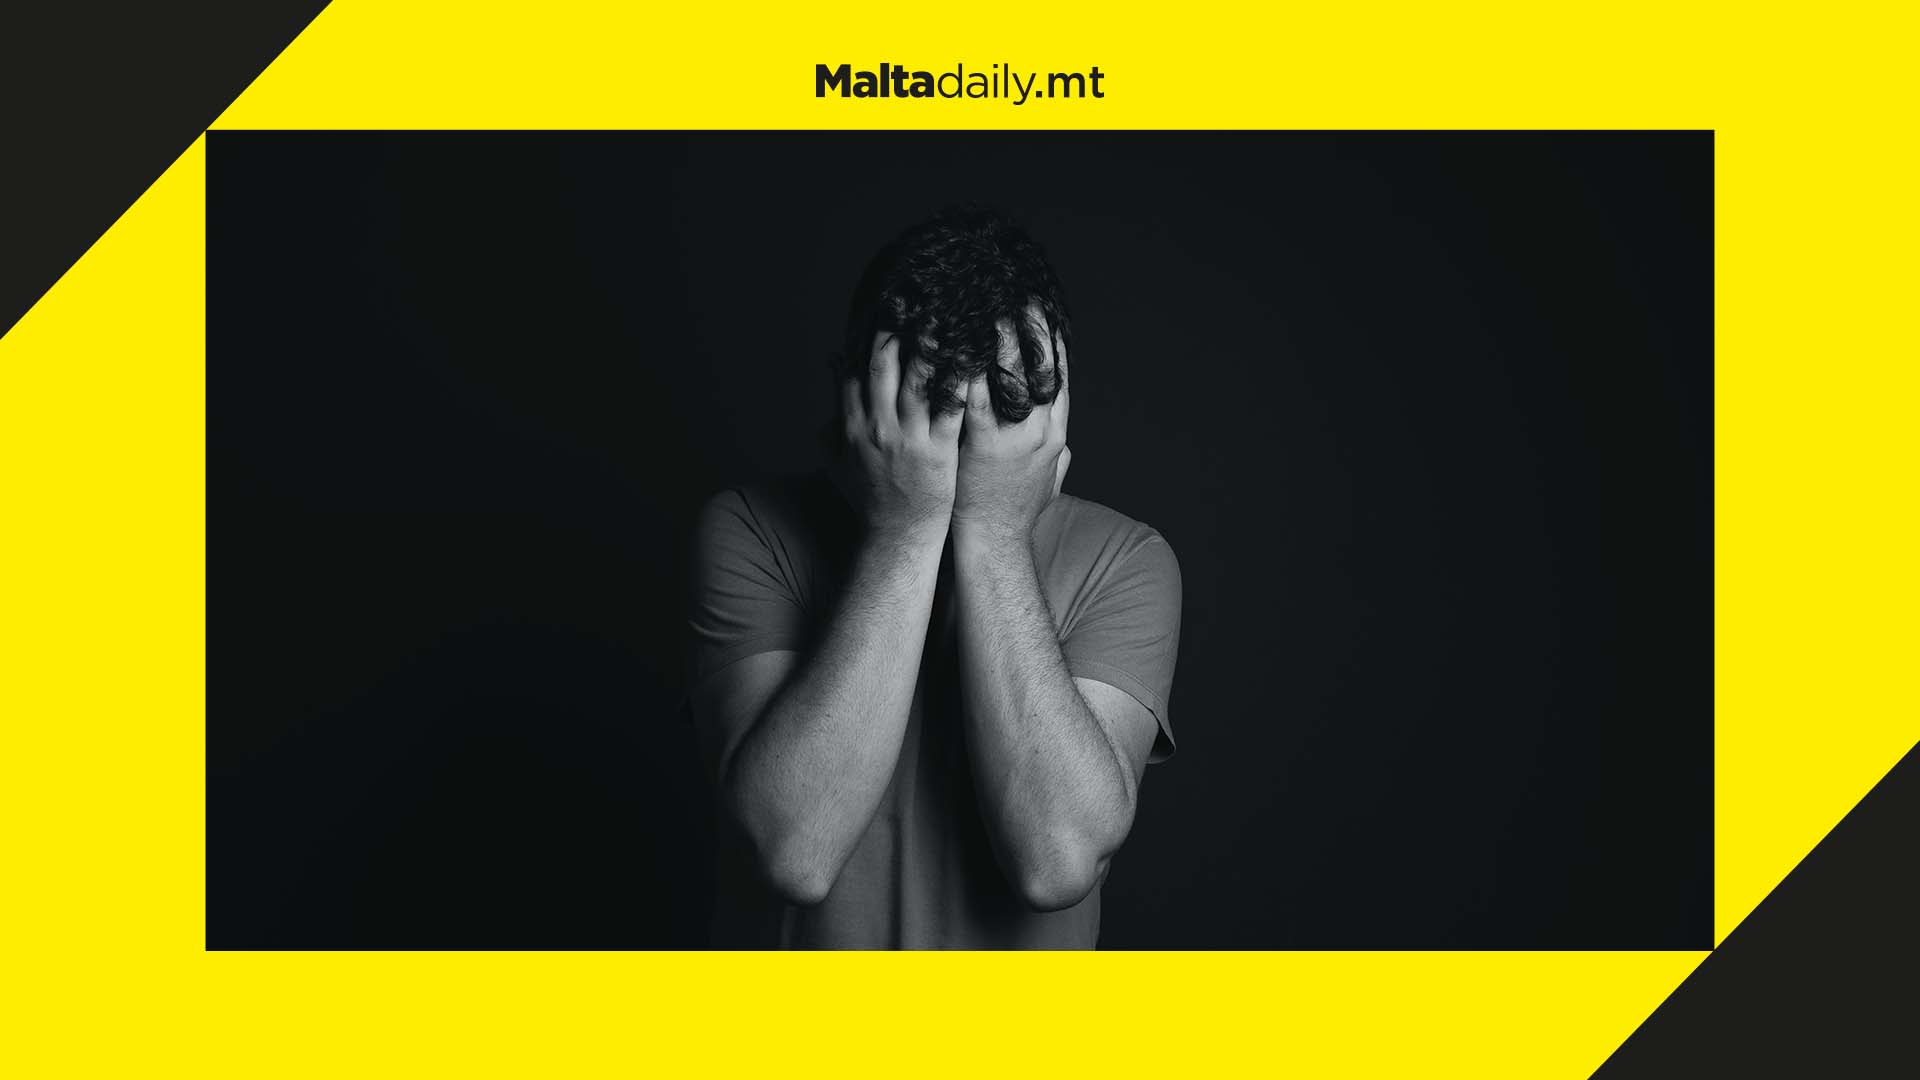 16 of Malta's 19 suicide cases in 2022 were male